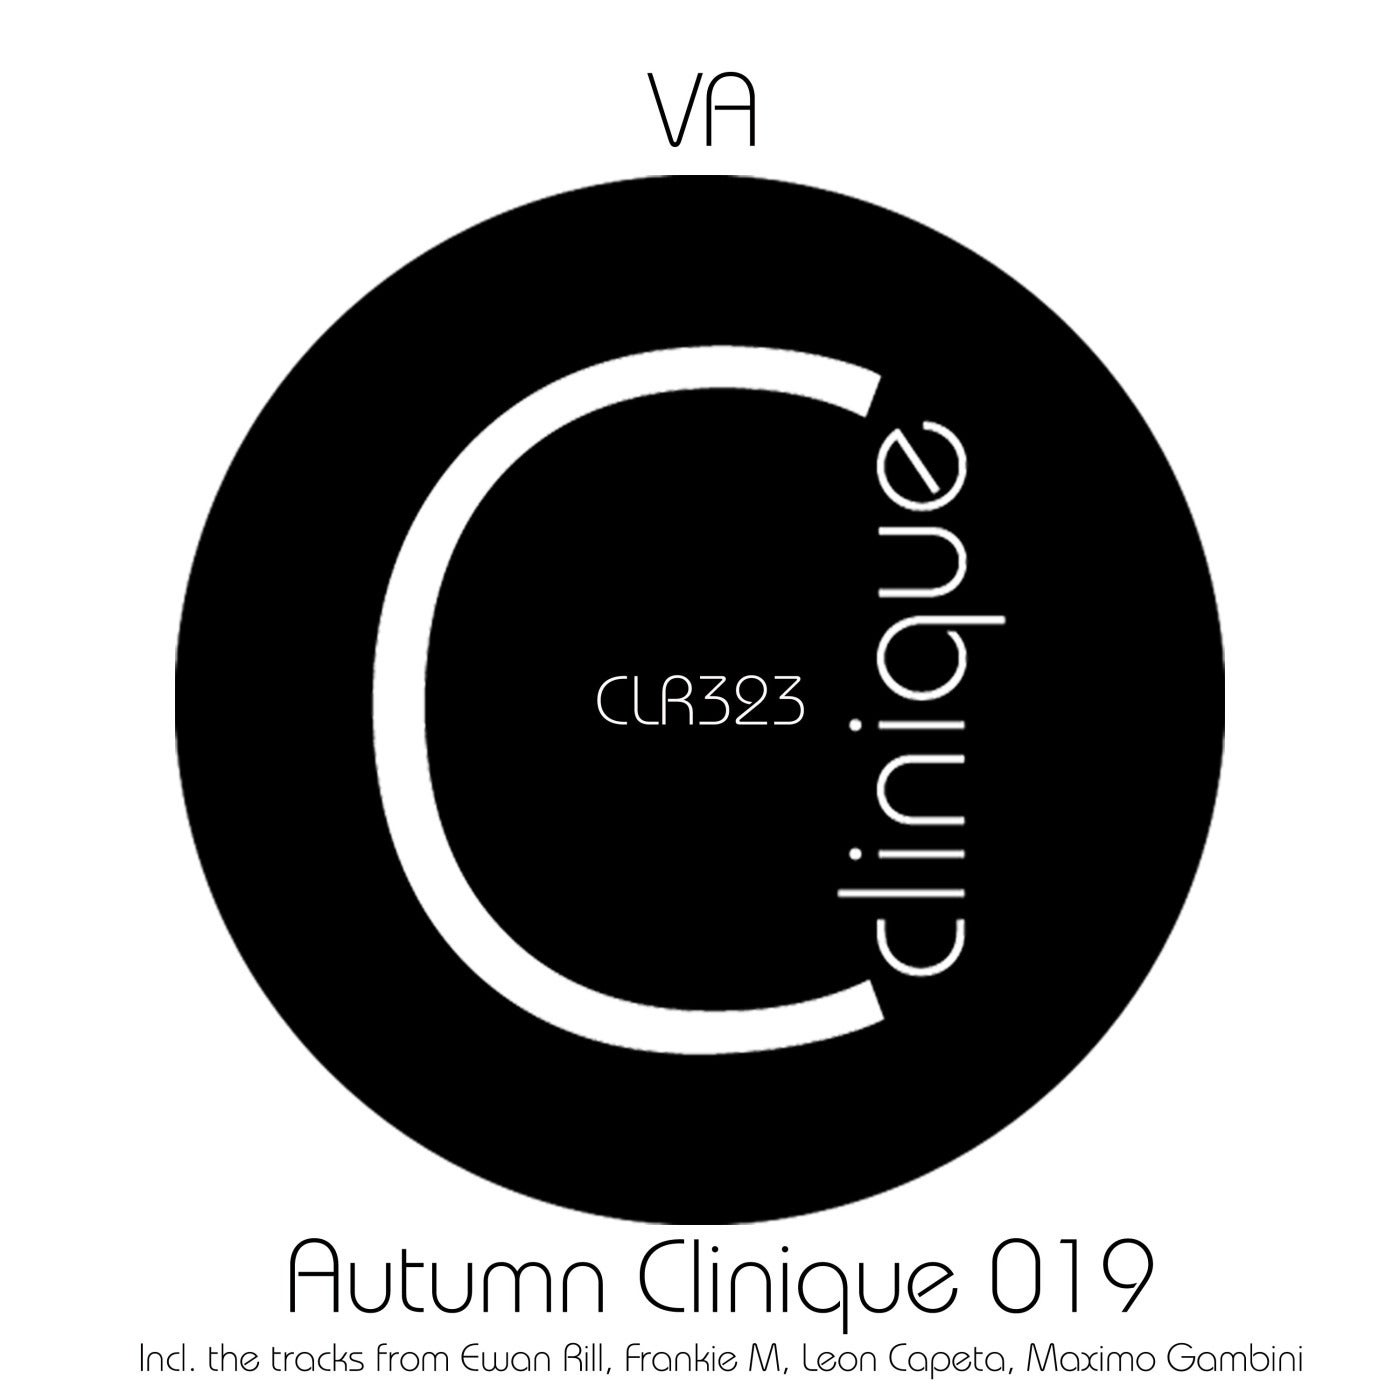 Autumn Clinique 019